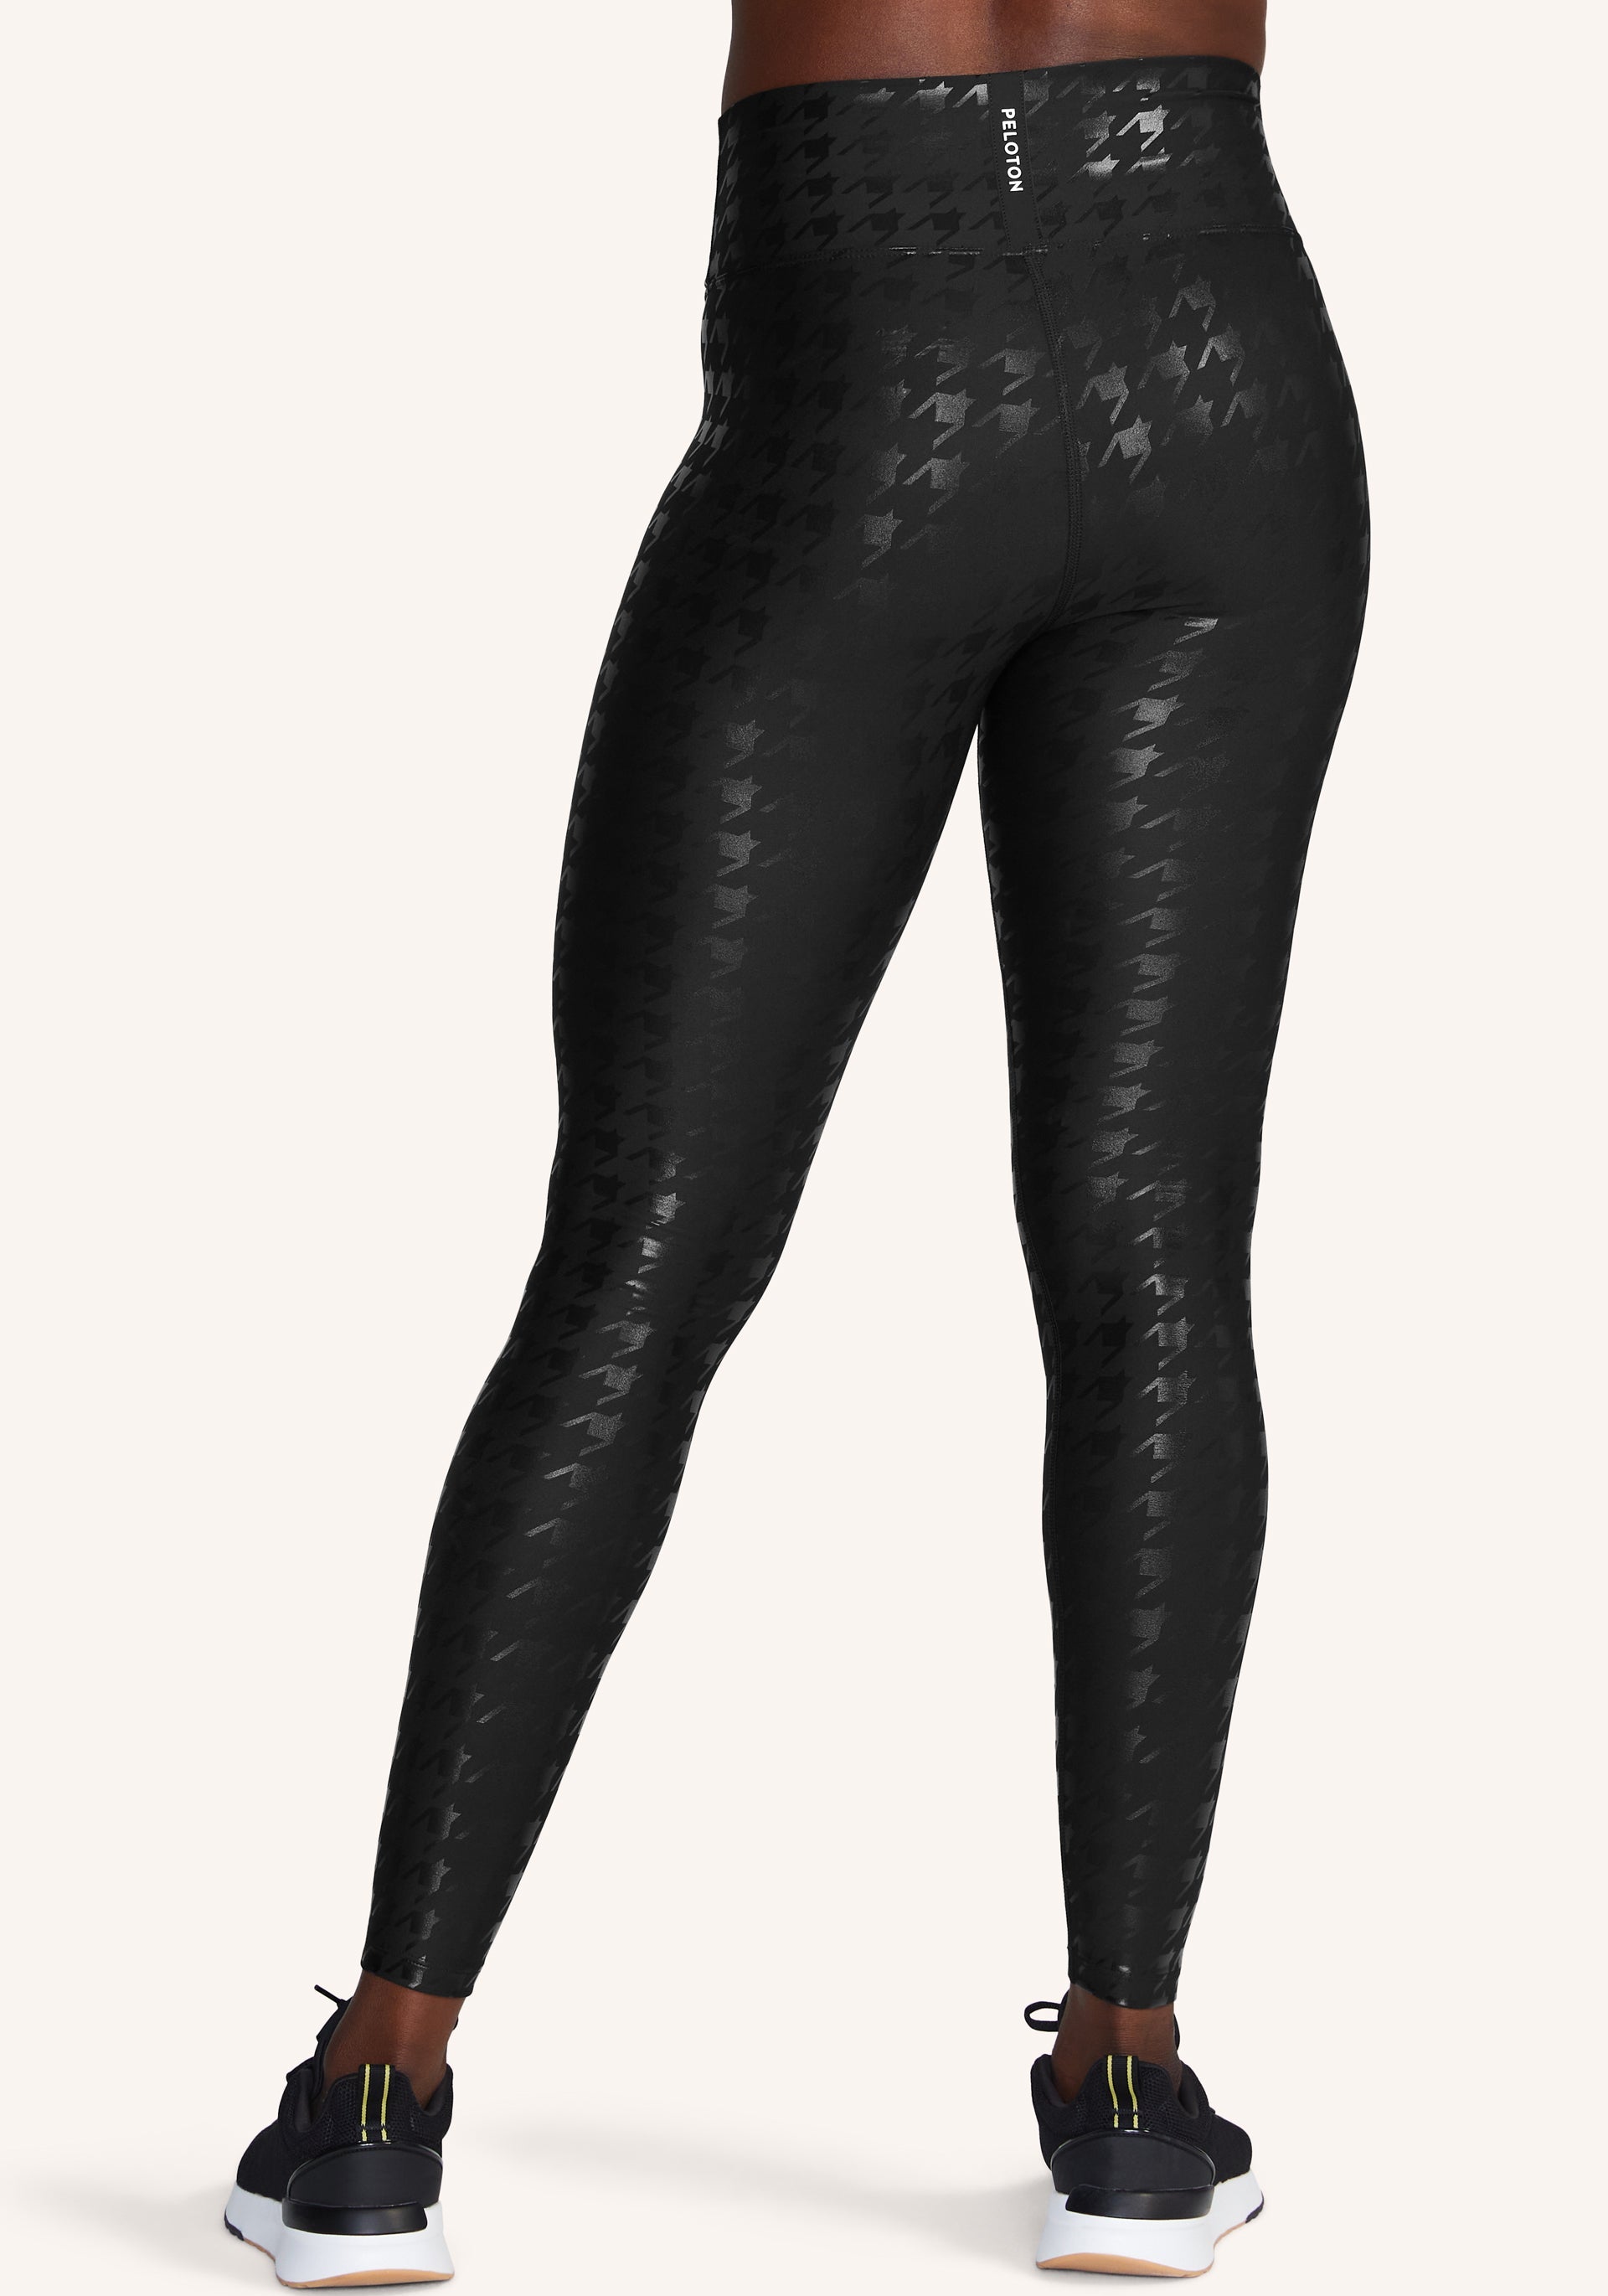 Black sports leggings with embossed pattern - Cinelle Paris